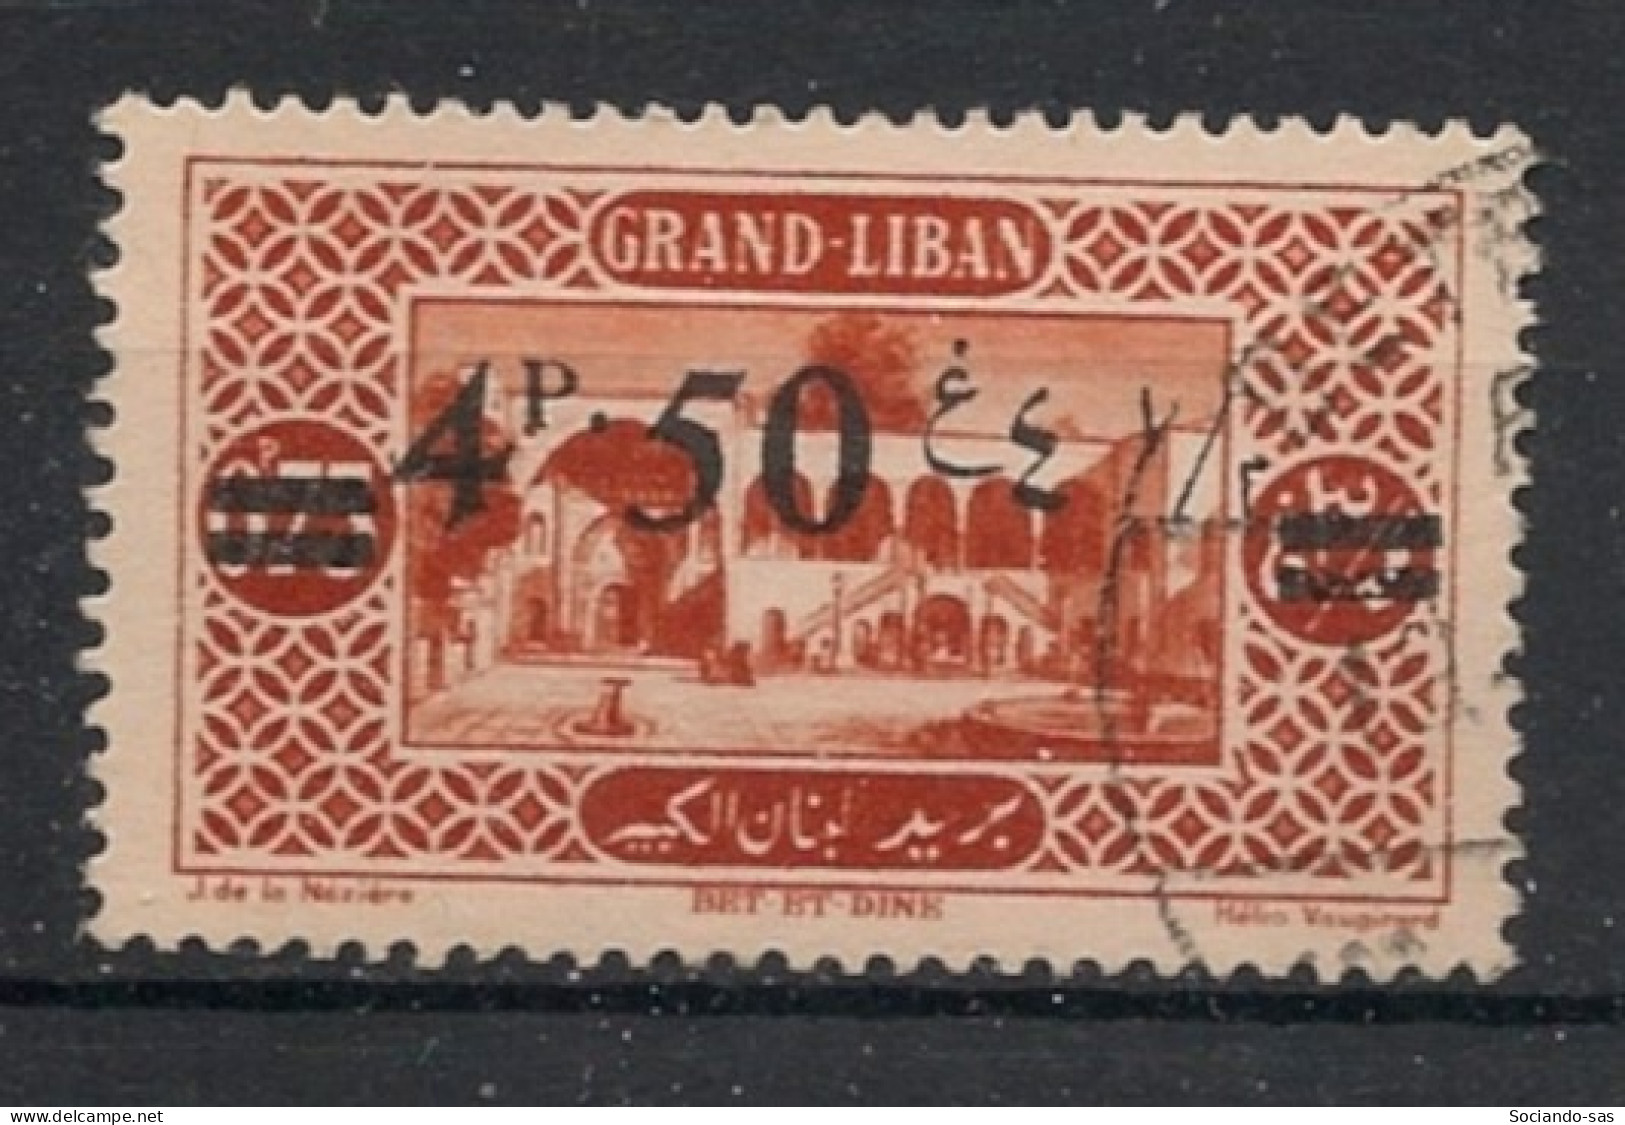 GRAND LIBAN - 1926 - N°YT. 77 - 4pi50 Sur 0pi75 Brun-orange - Oblitéré / Used - Oblitérés